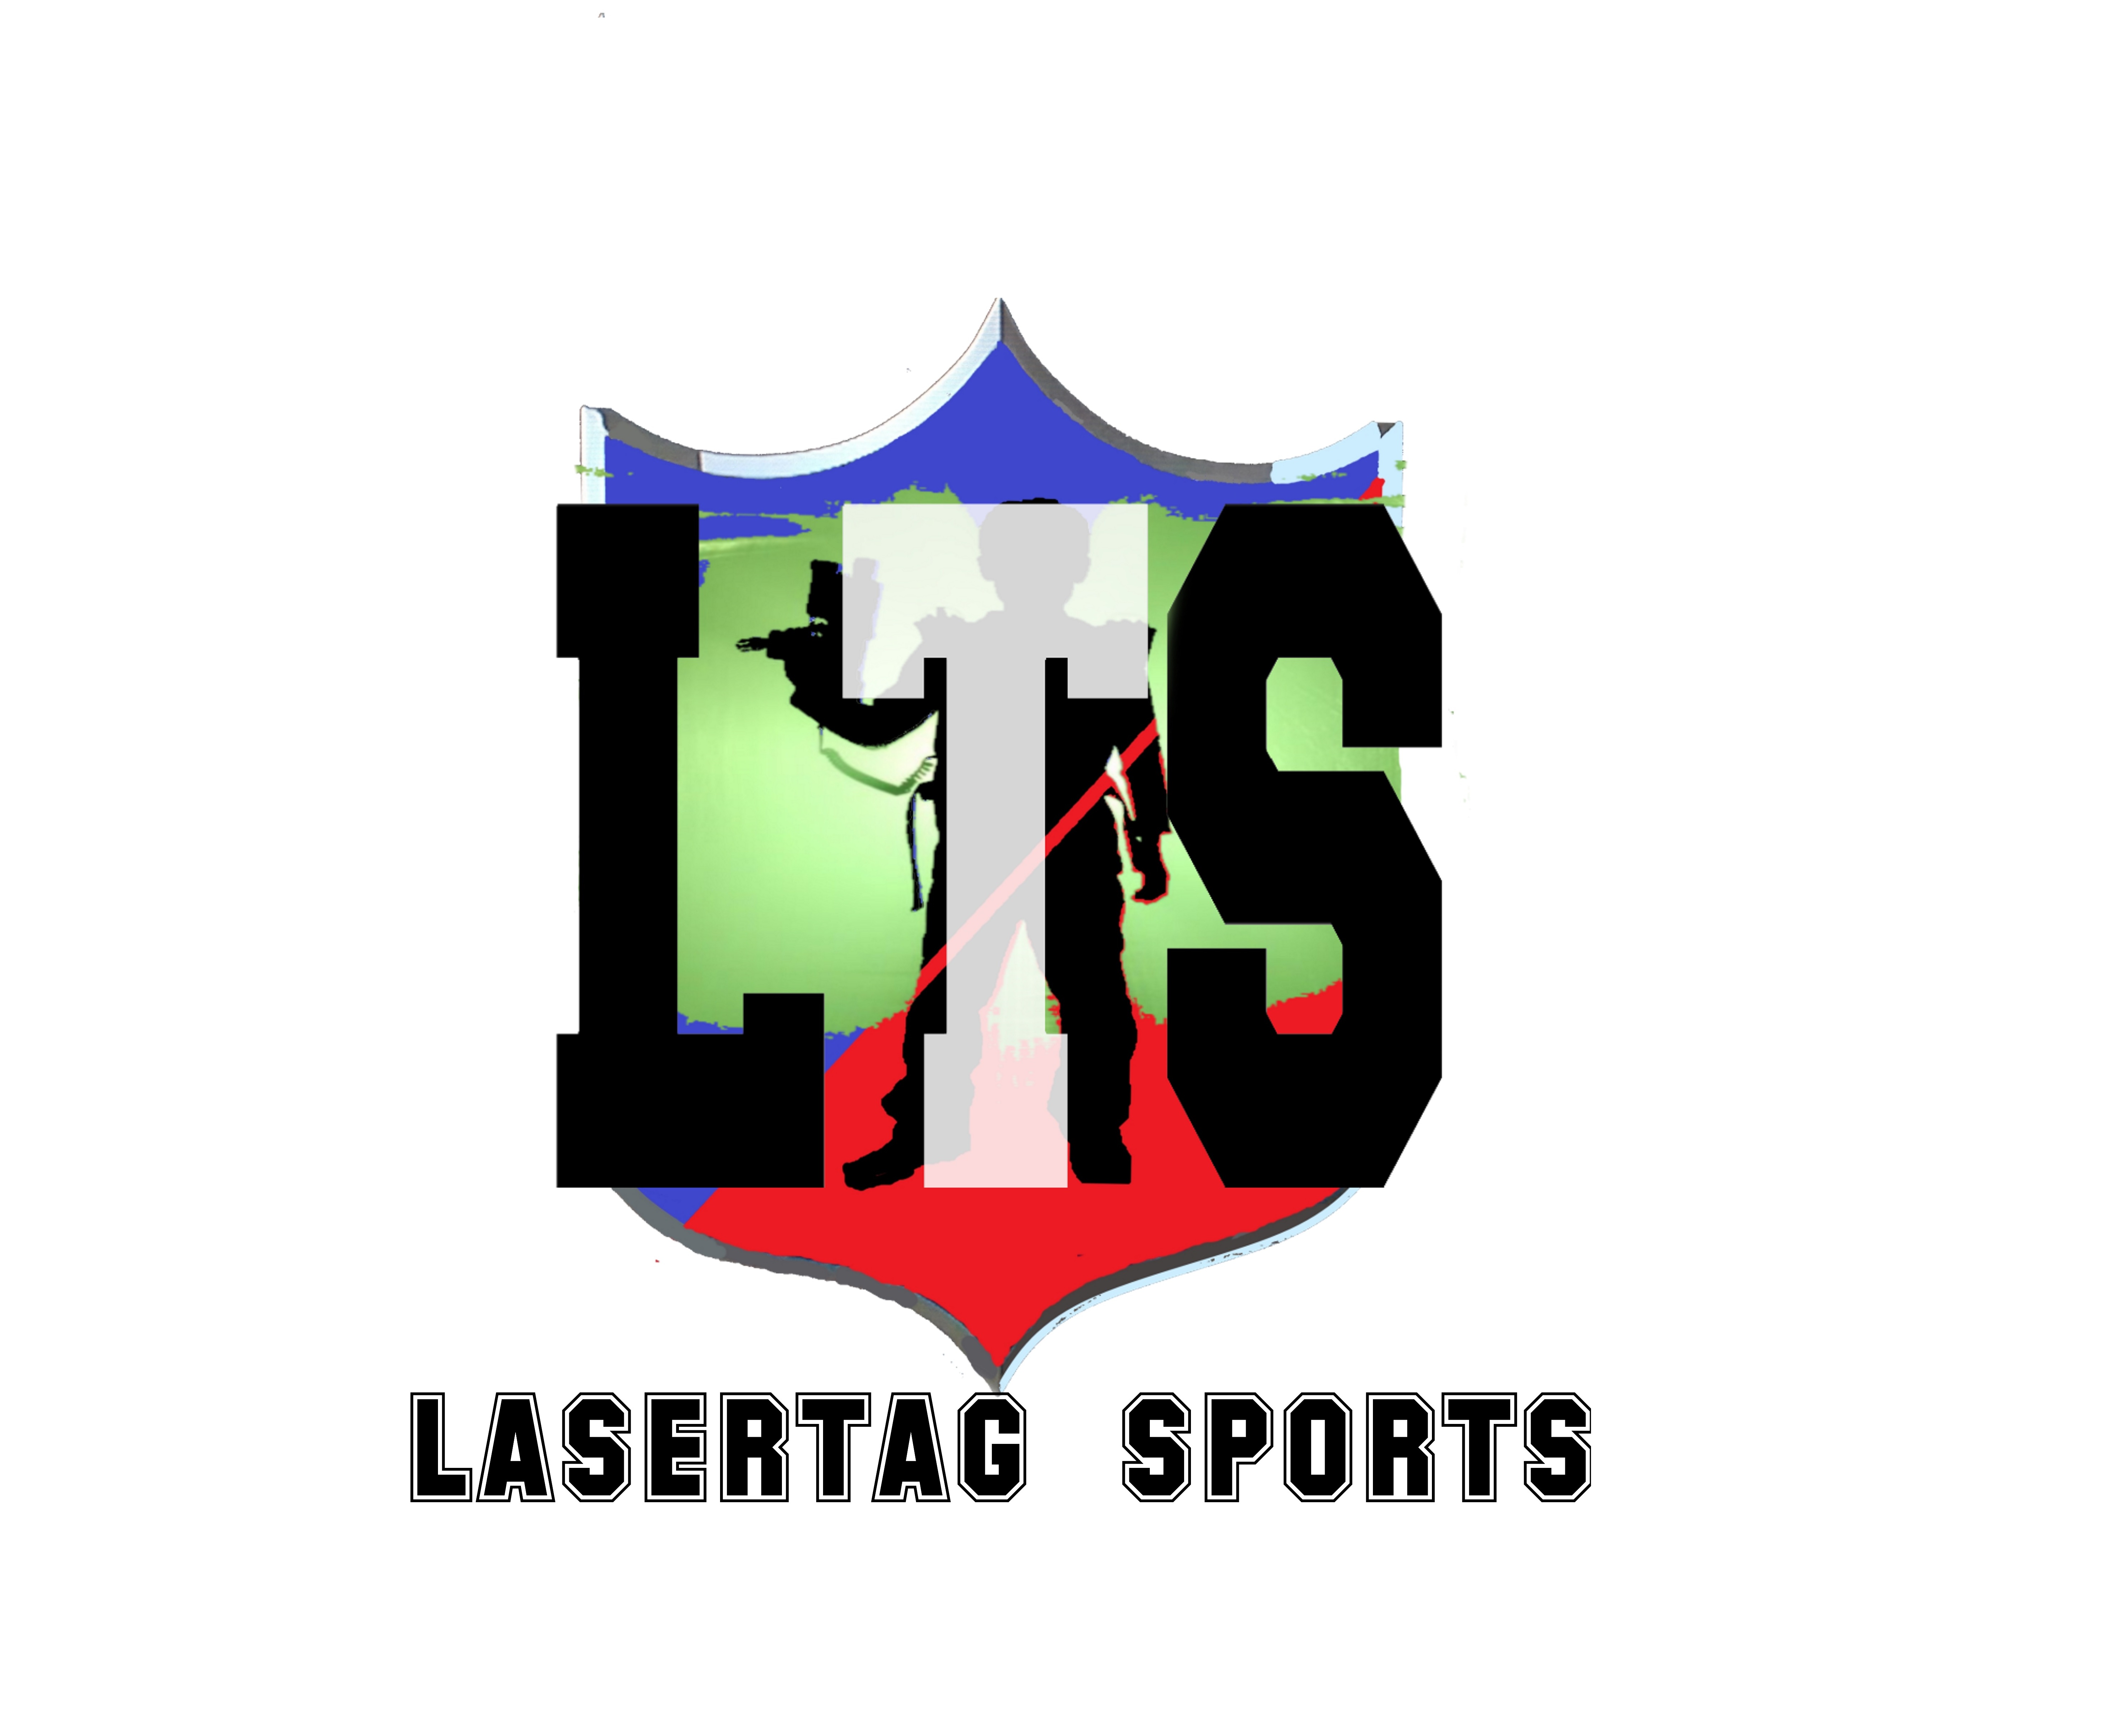 LasertagSports